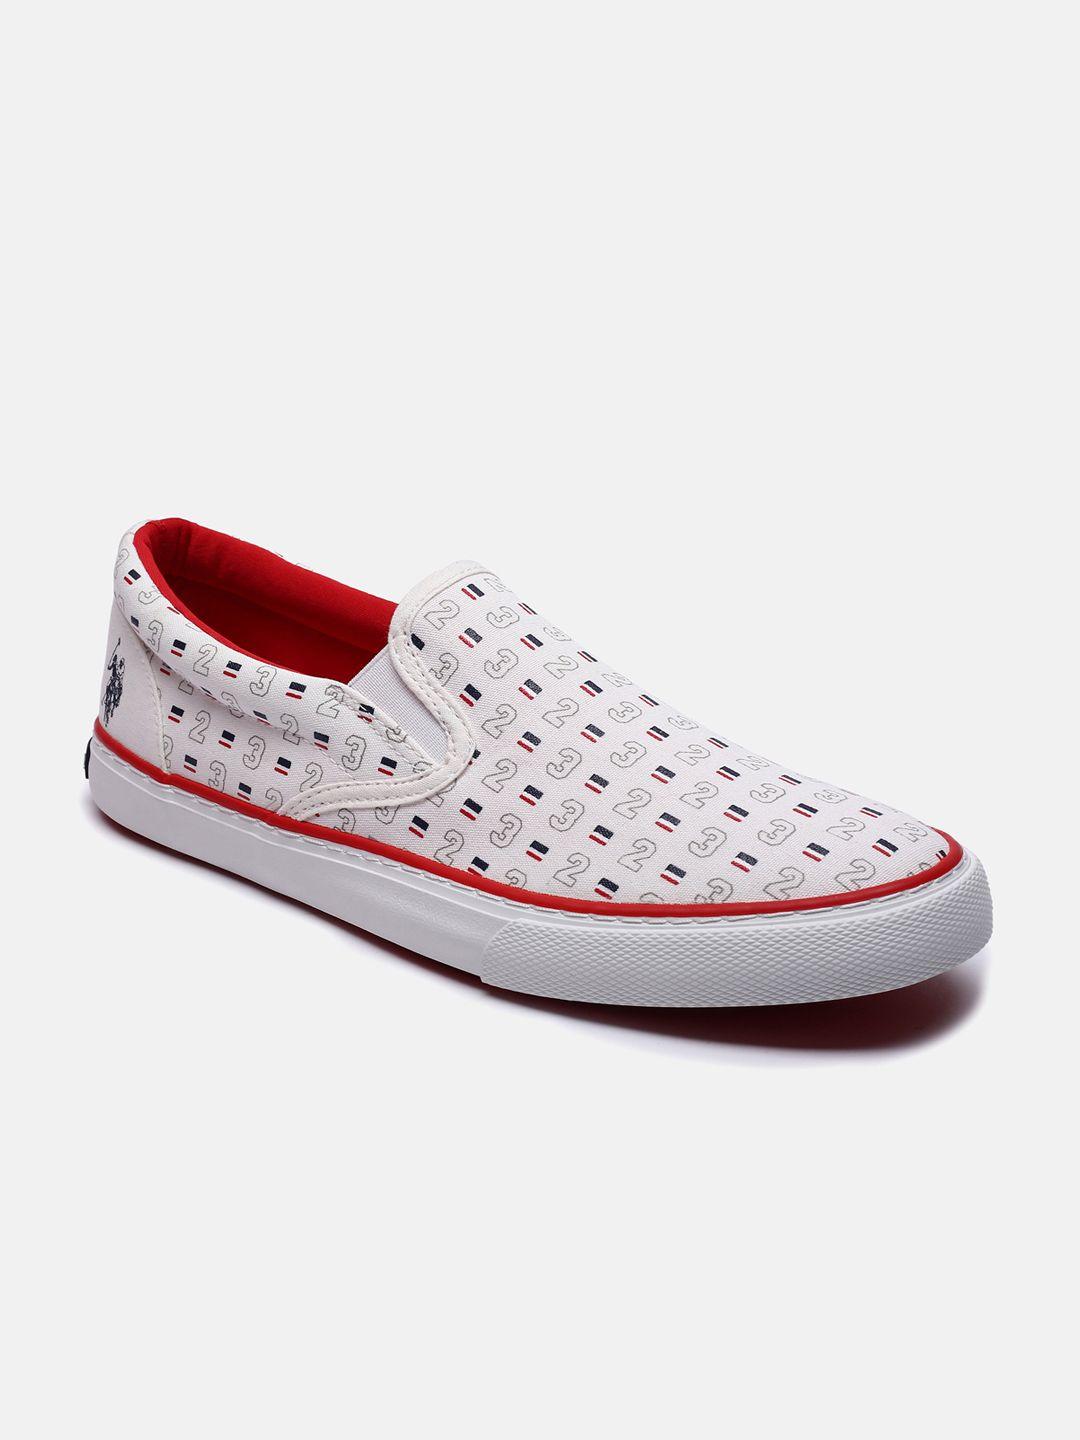 u-s-polo-assn-men-off-white-printed-slip-on-sneakers